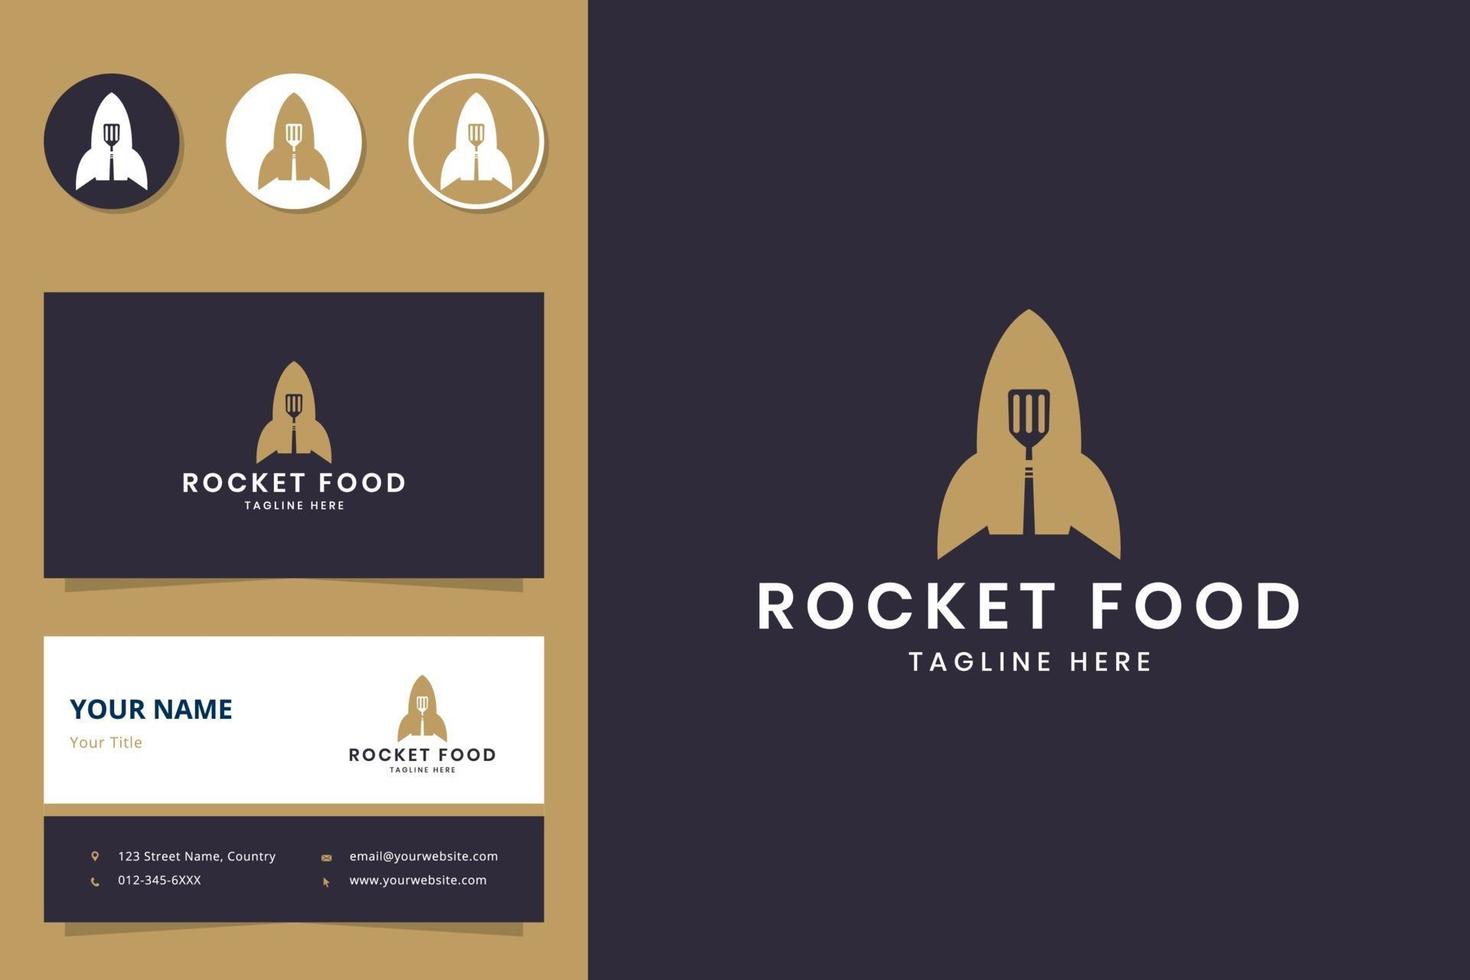 rocket cooking negative space logo design vector